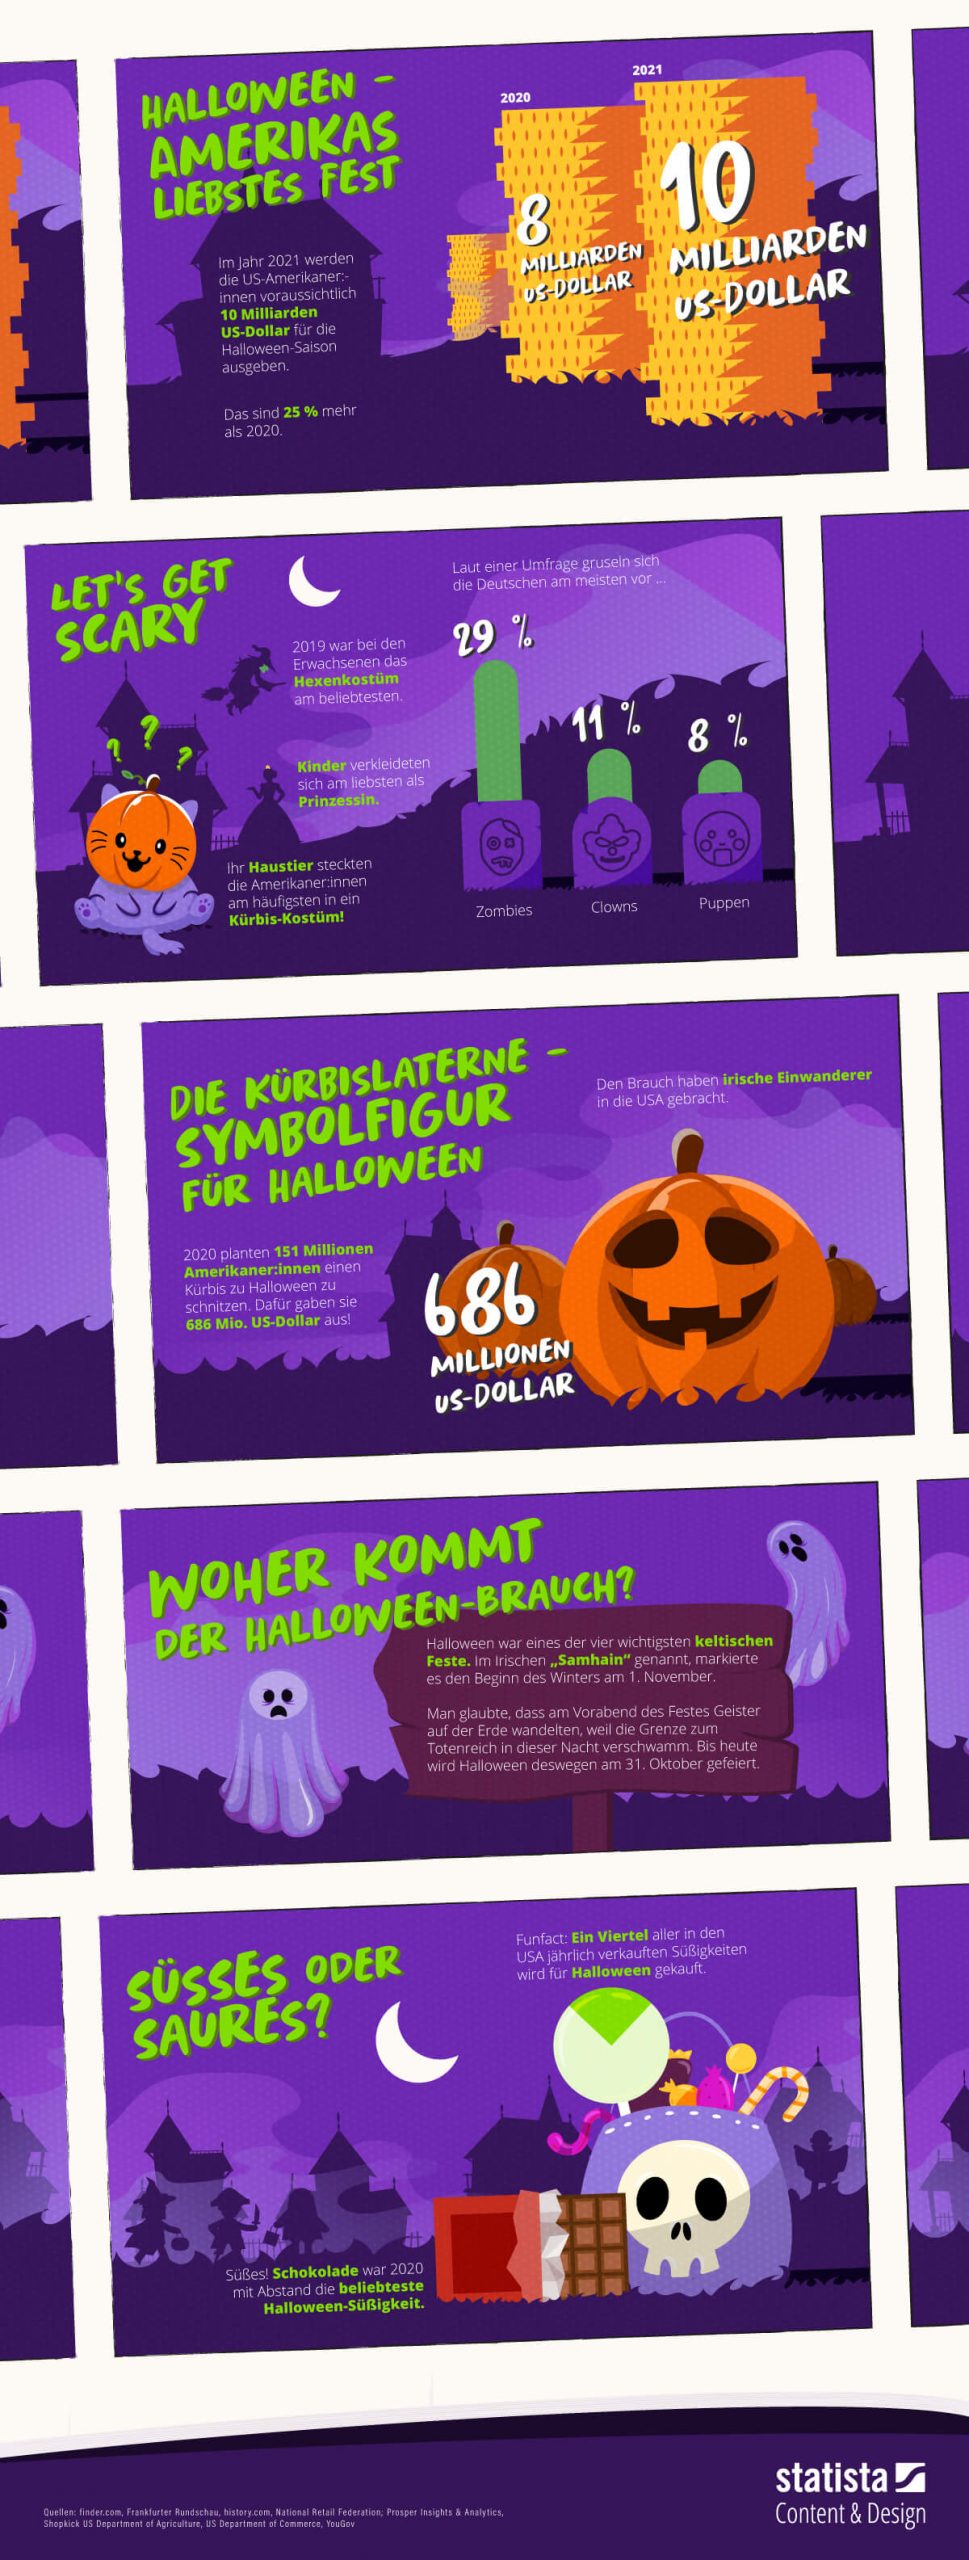 Inforgrafik zum Thema Halloween